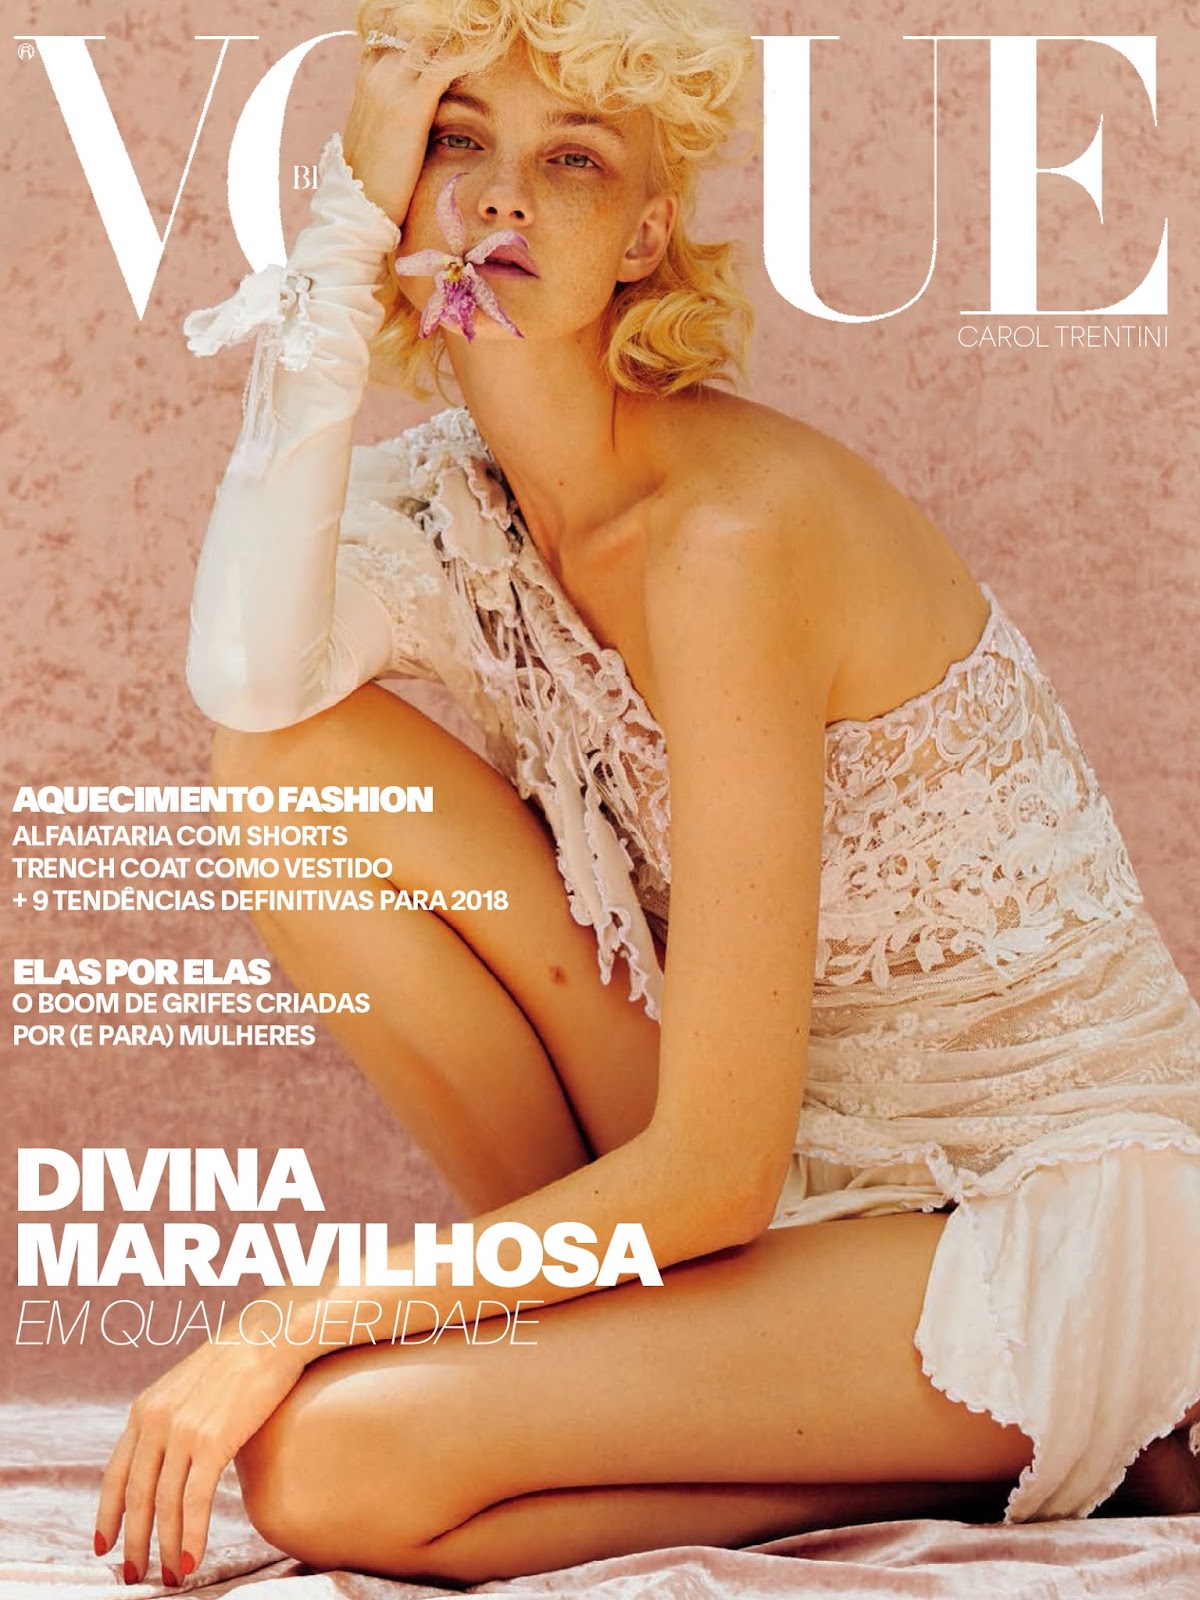 Vogue Brazil February 2018 1.jpg